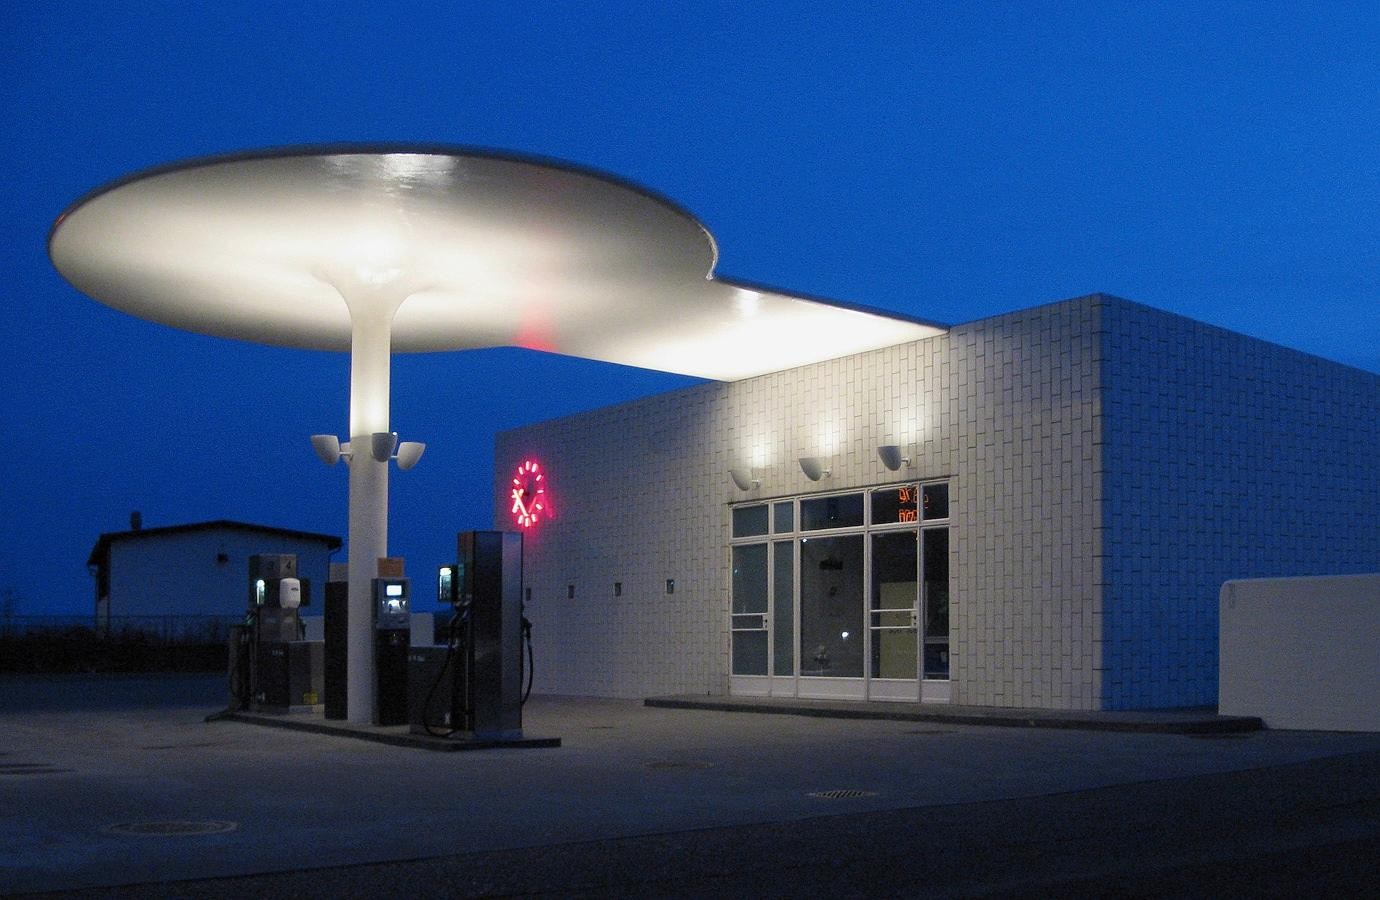 Tankstelle von Arne Jacobsen in Skovshoved, Dänemark